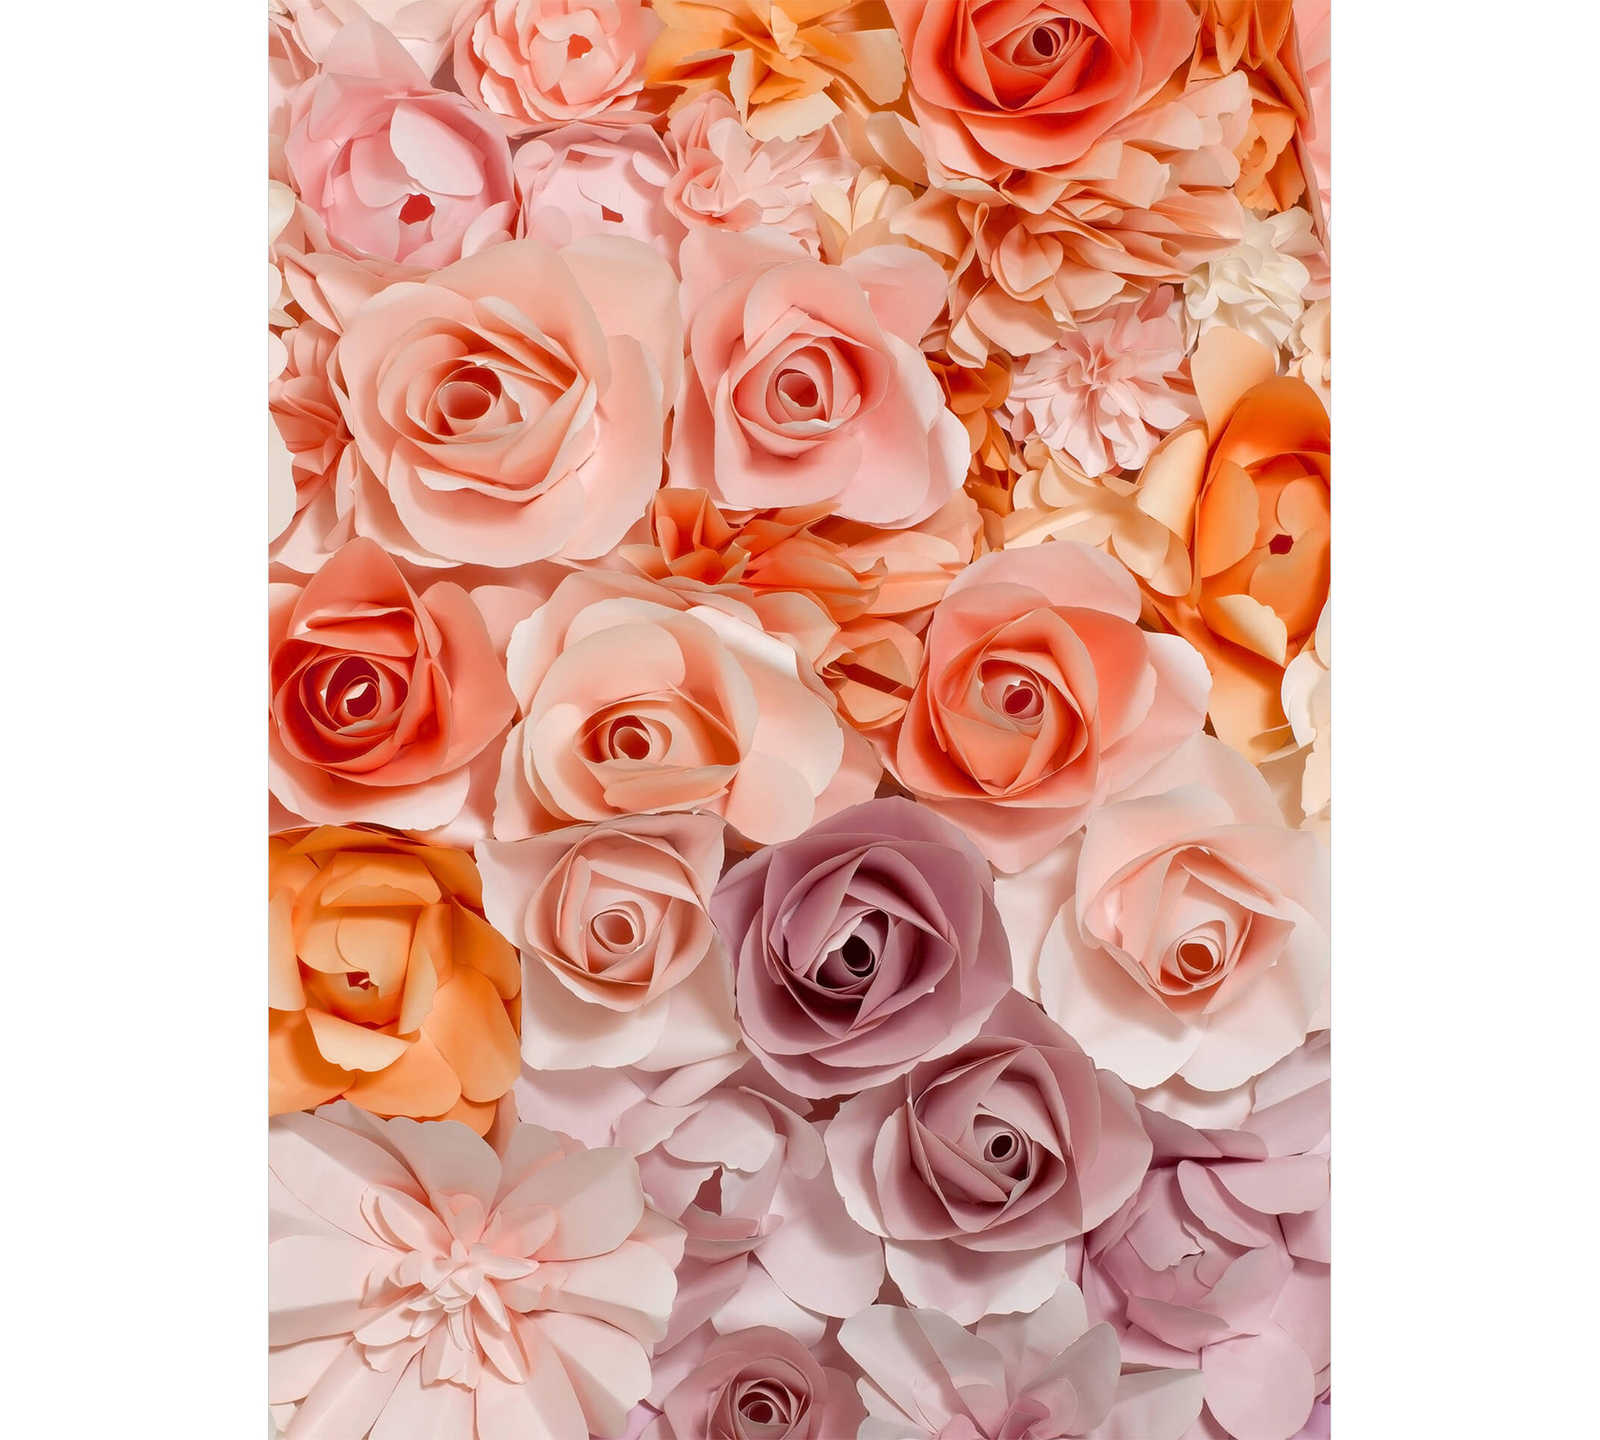         Flowers mural 3D Roses, portrait format - Pink
    